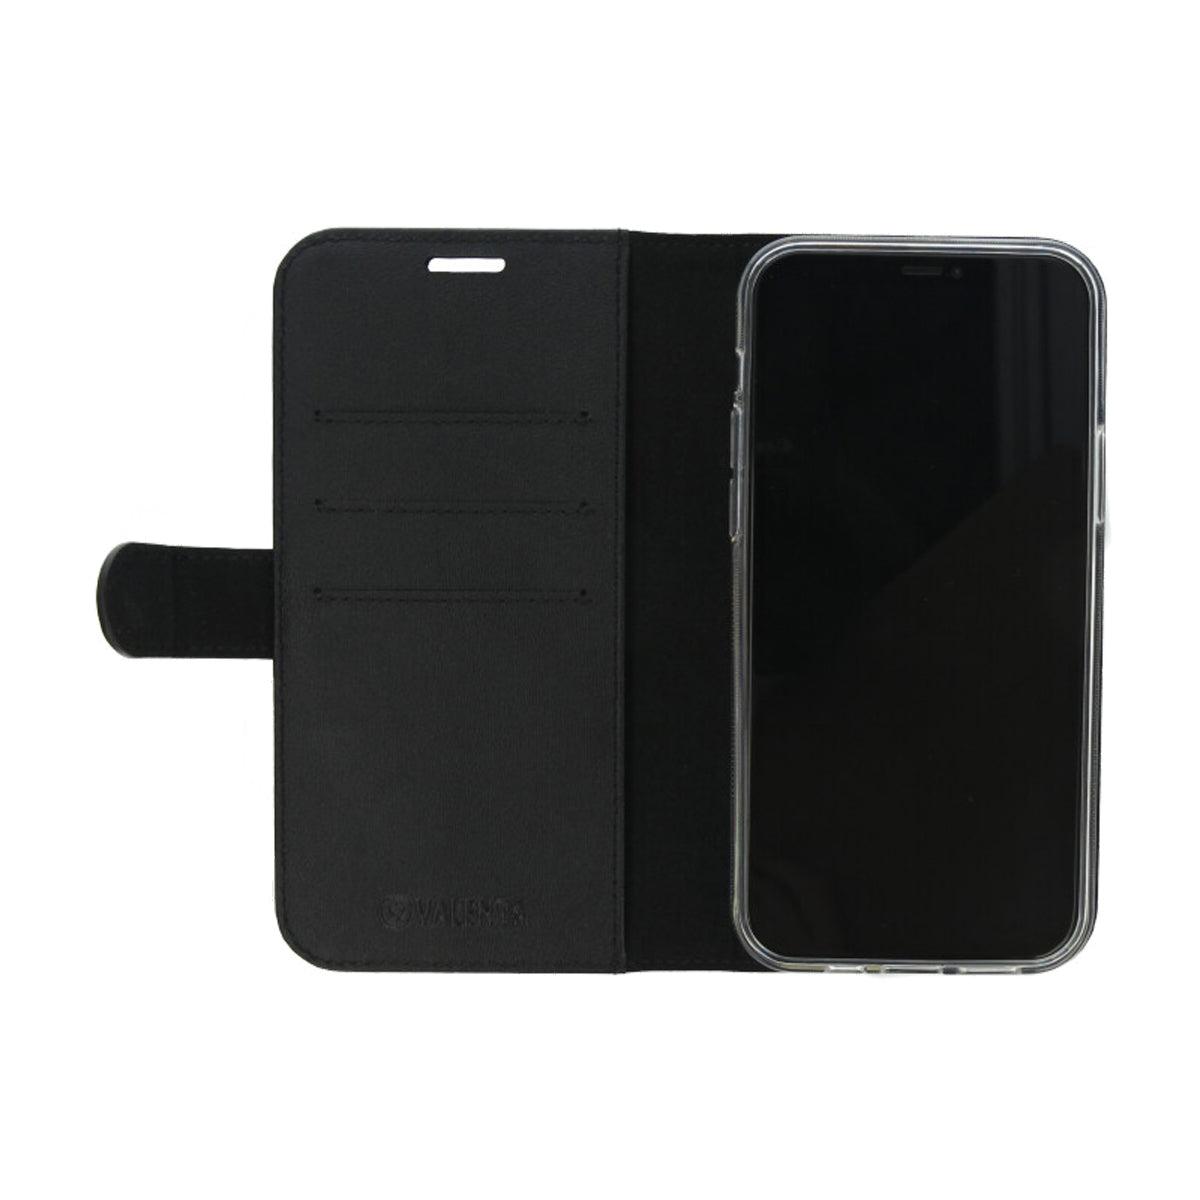 Book Case Classic Black iPhone 12-12 Pro